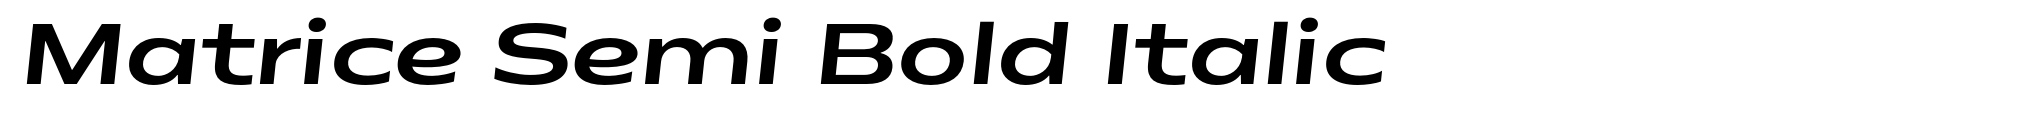 Matrice Semi Bold Italic image